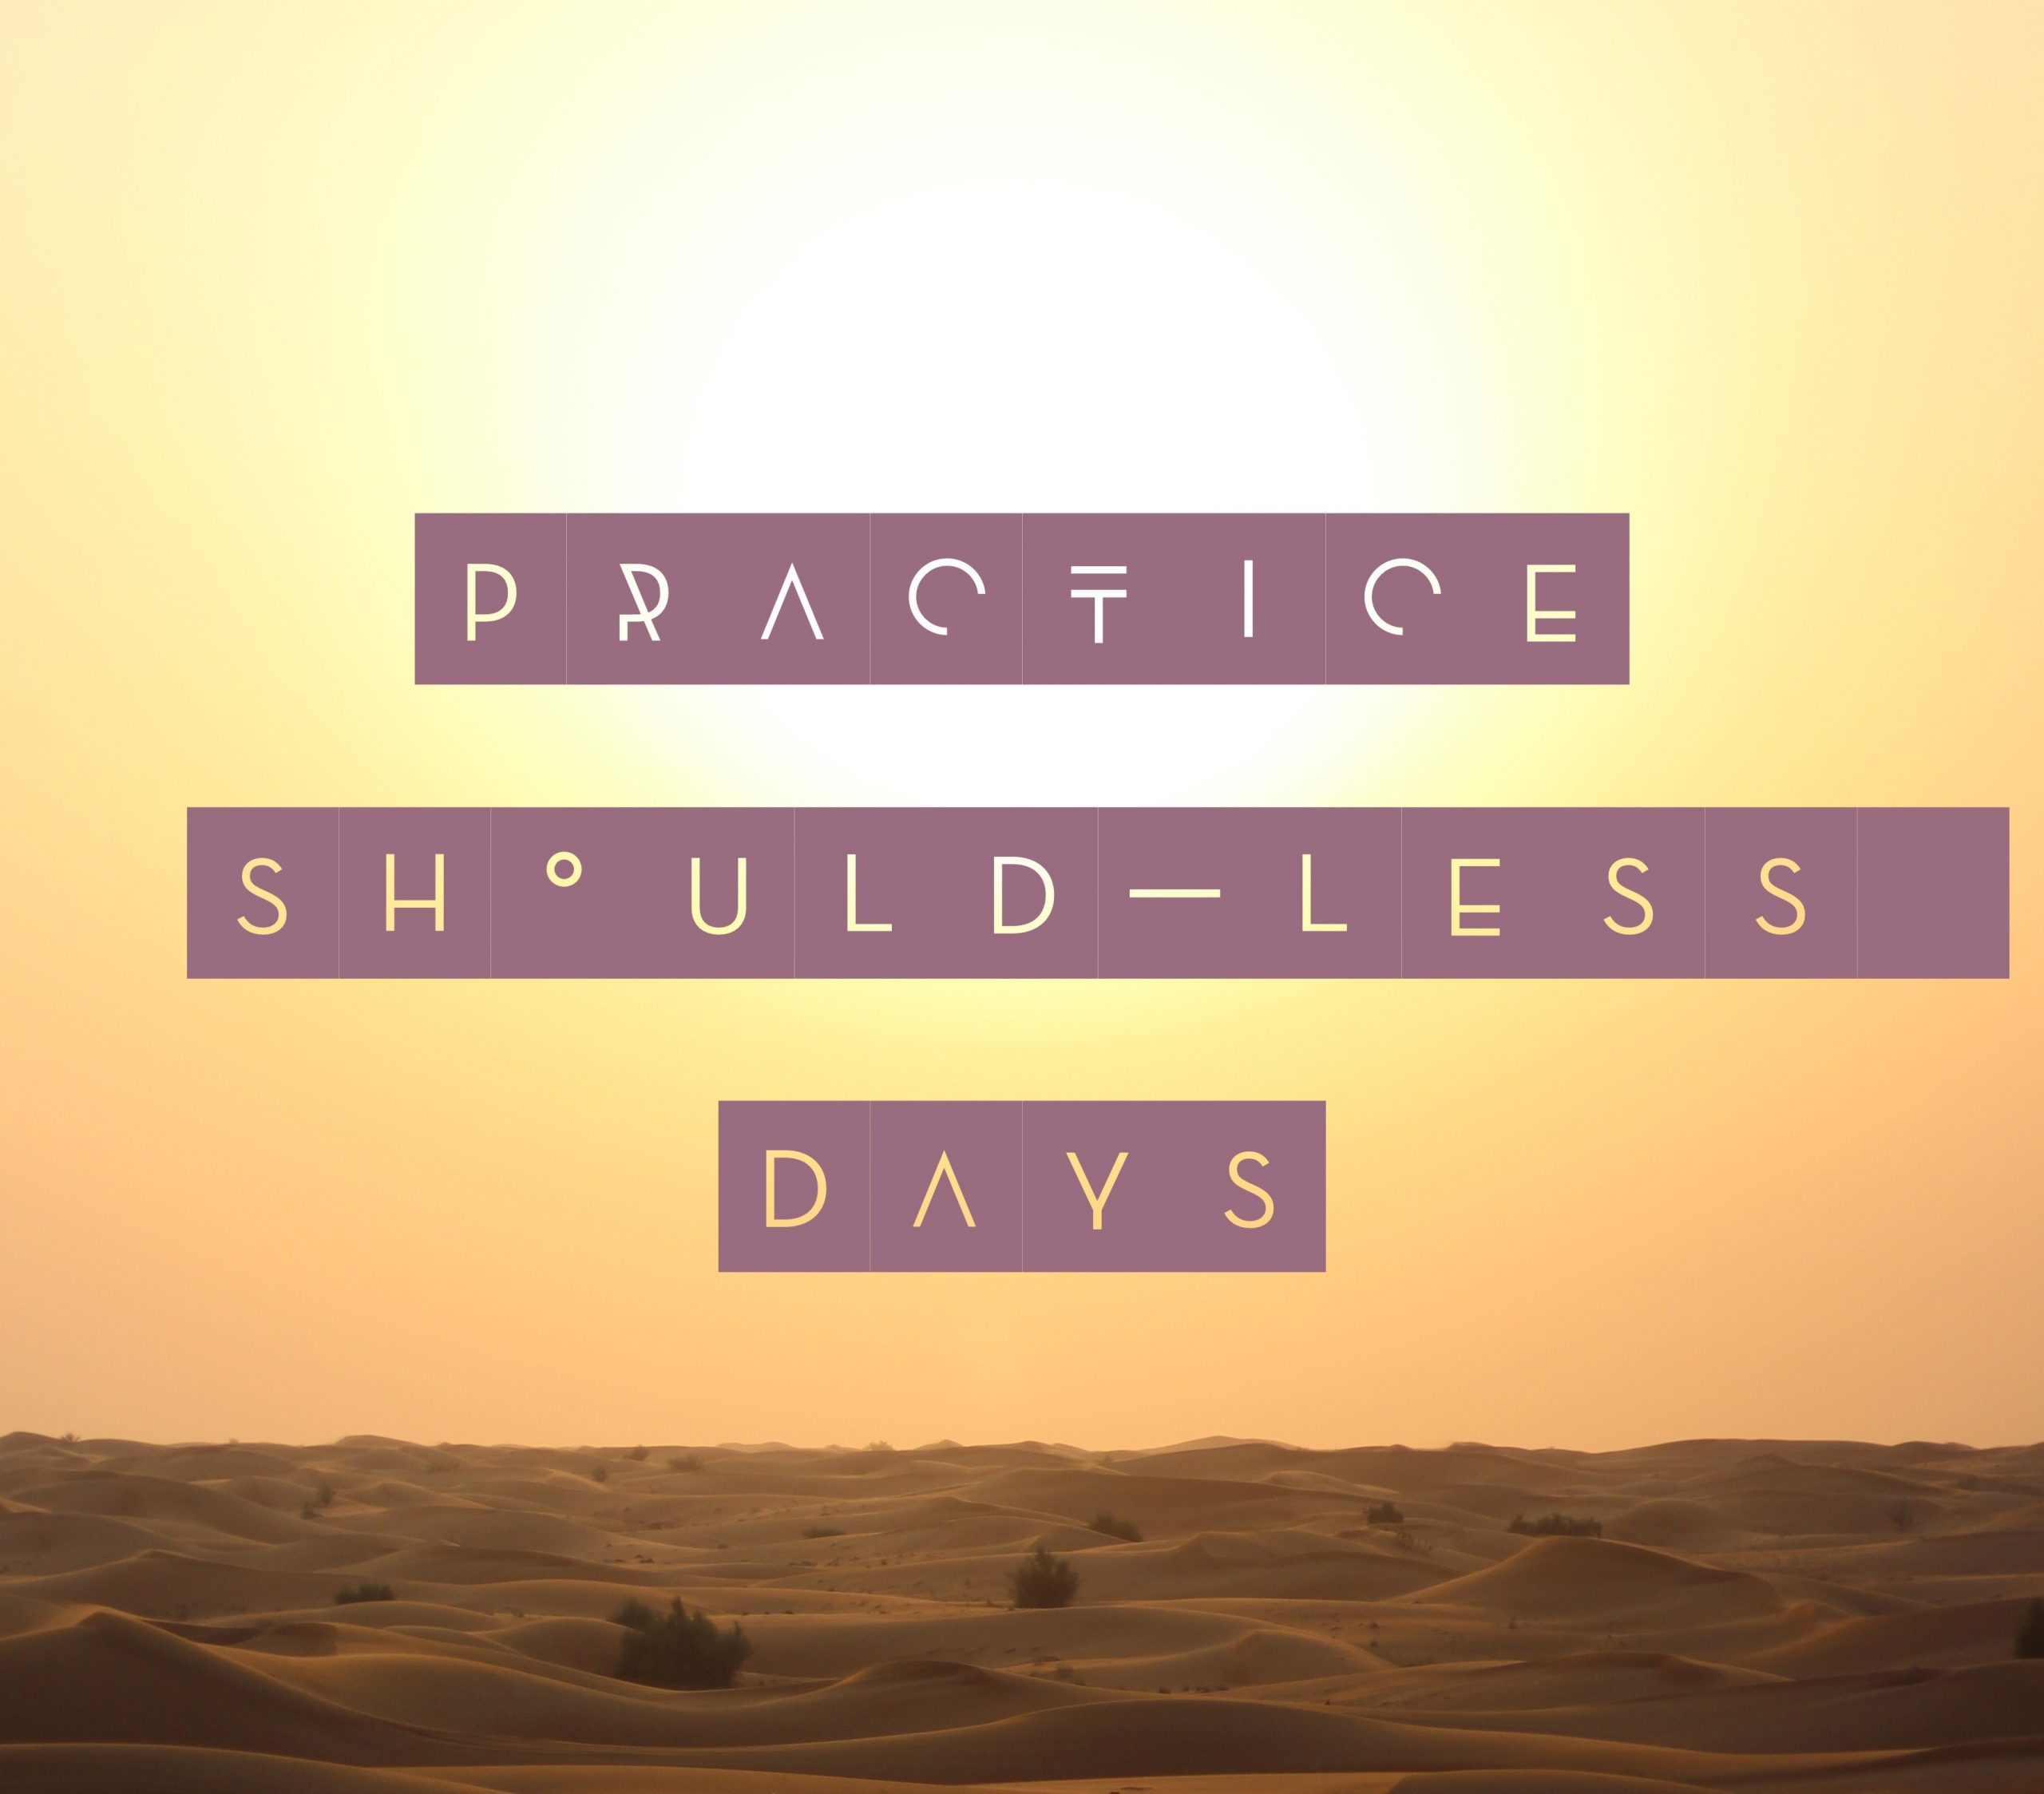 Practice Should-less days